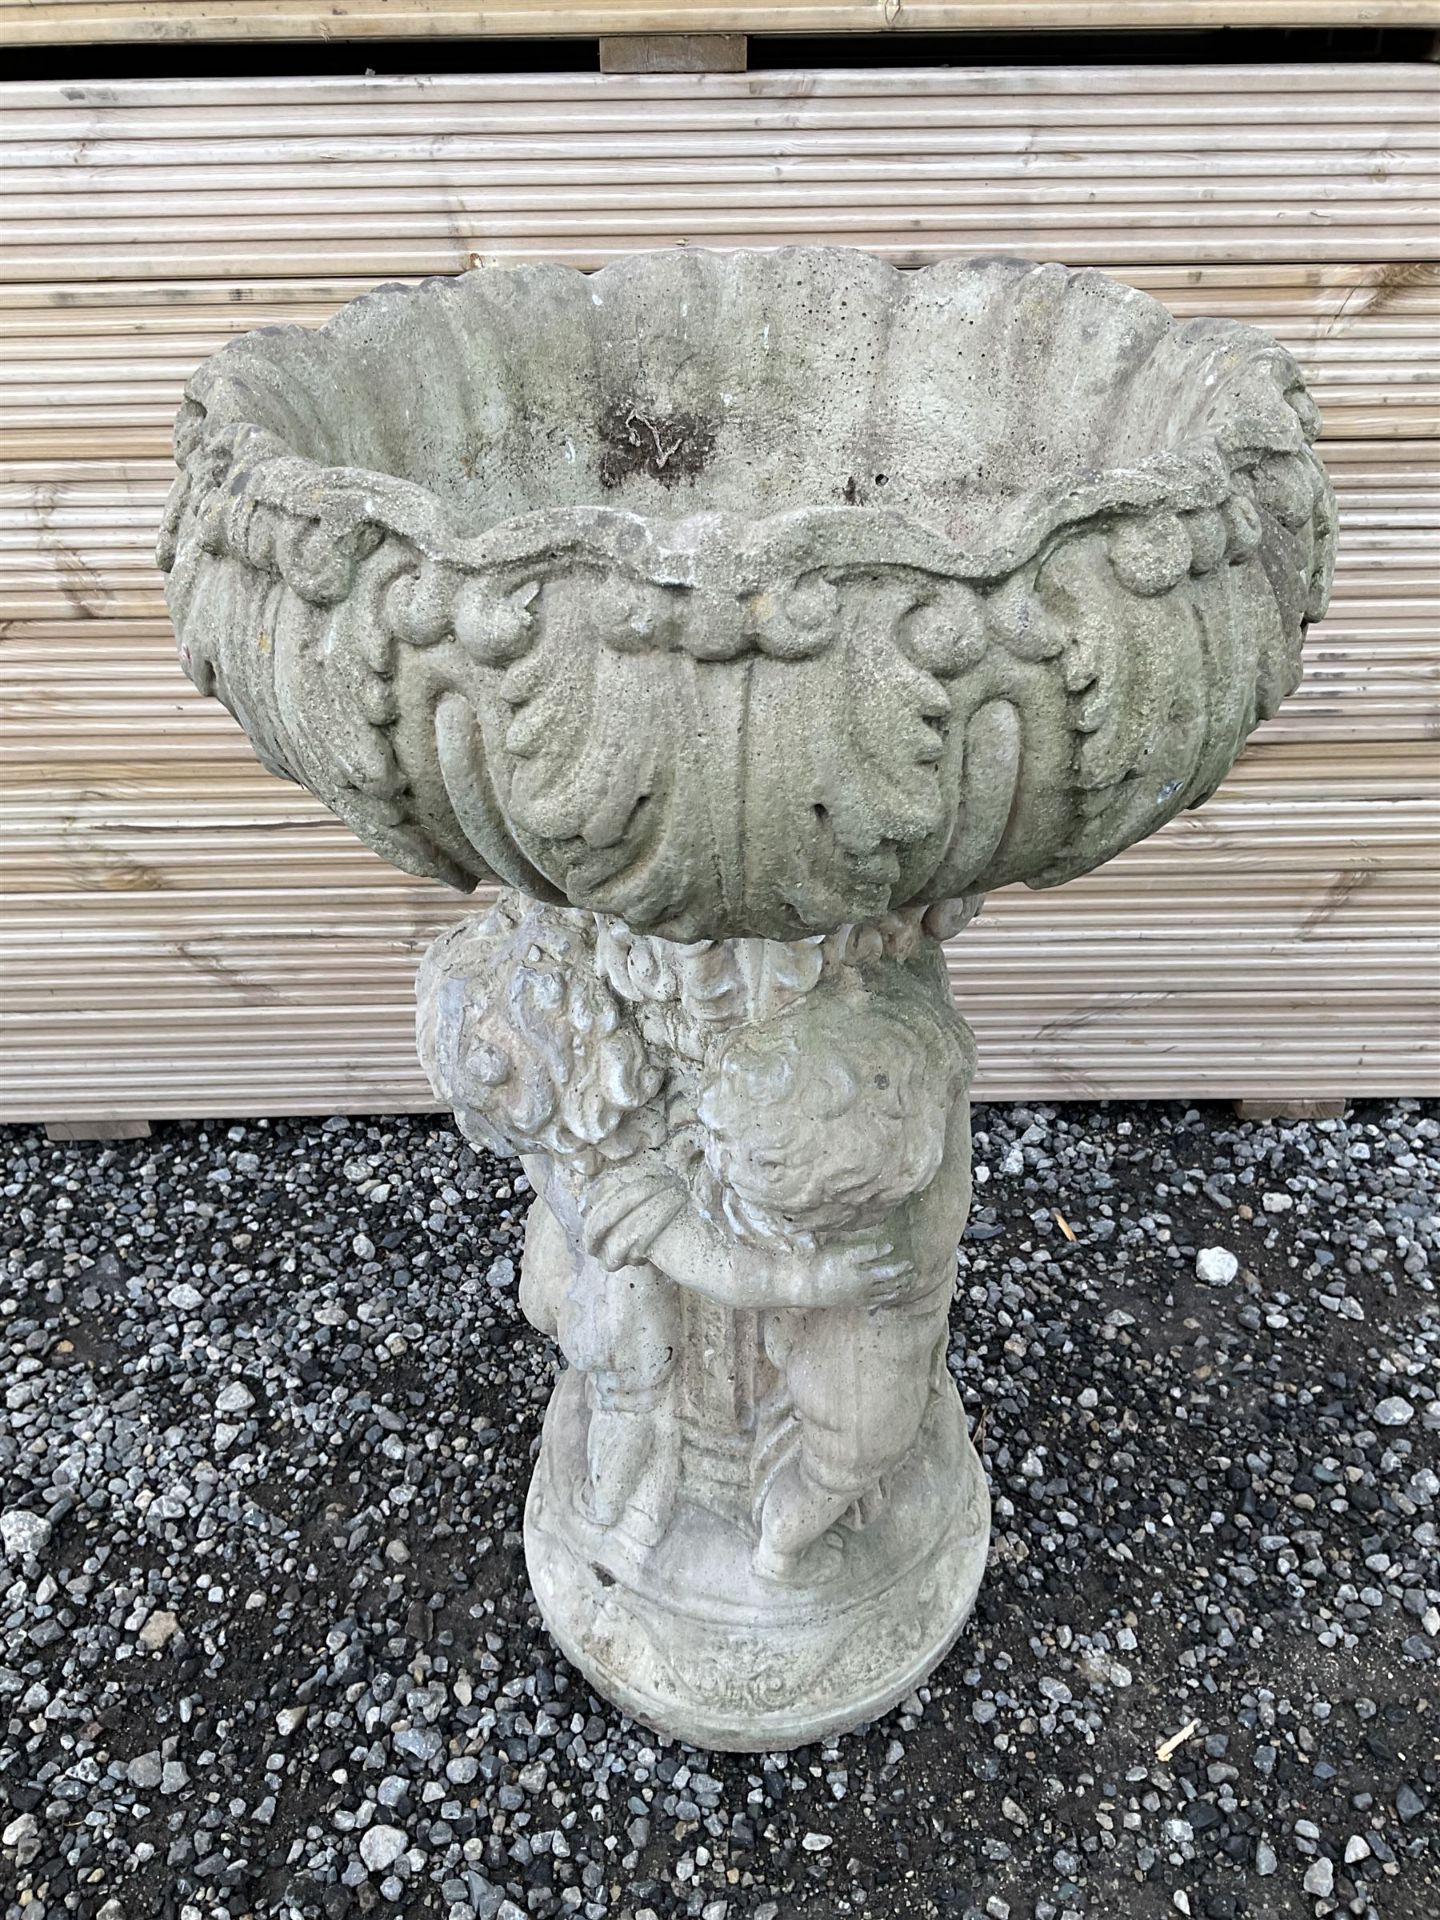 Cast stone planter or bird bath - Image 2 of 4